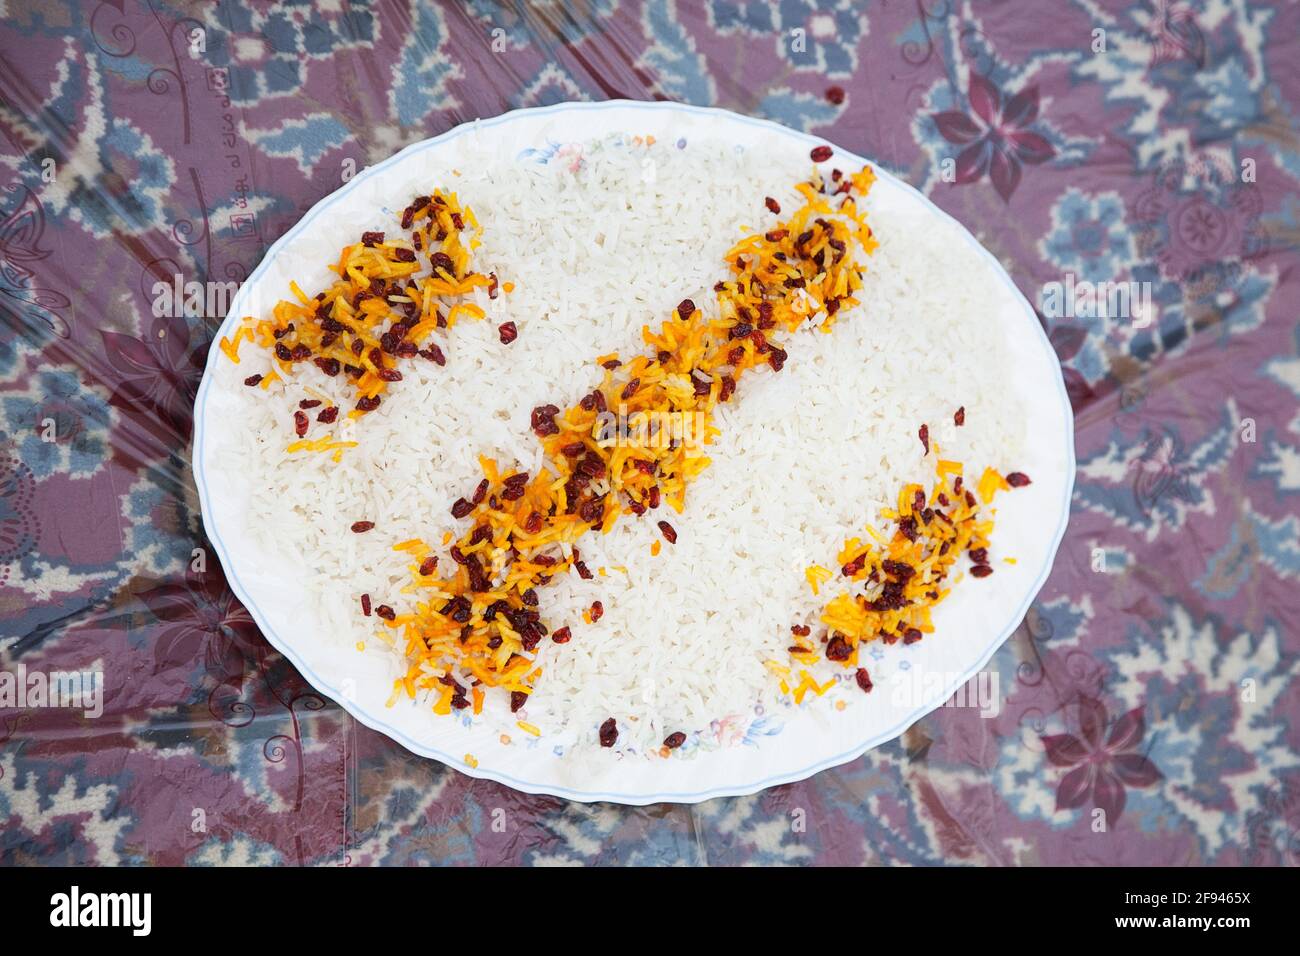 Safran-Reis verziert mit Berberizen. Stock Photo